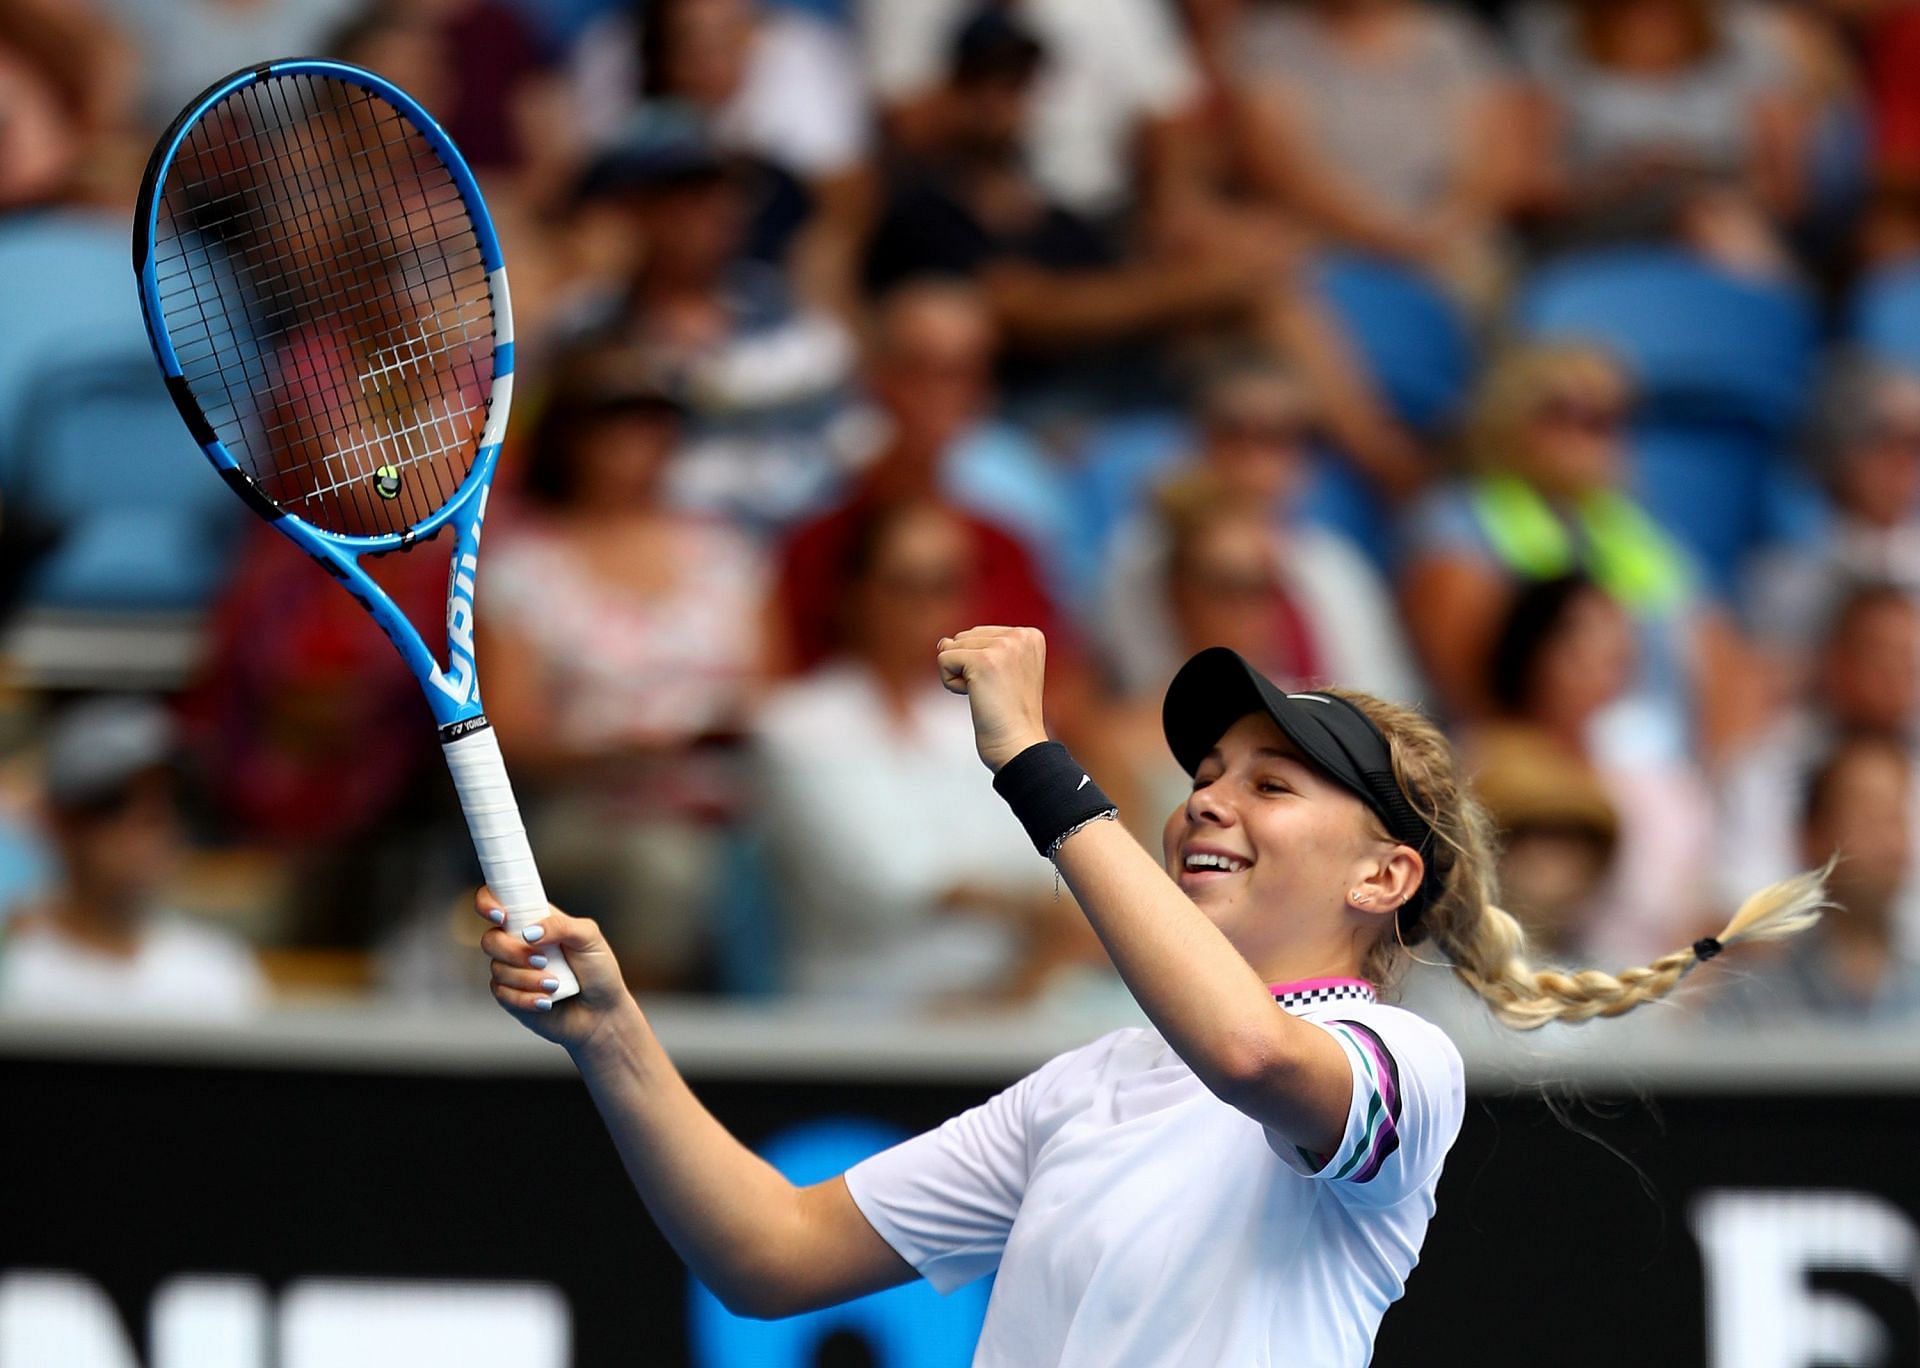 Amanda Anisimova lifted her second WTA title in Melbourne